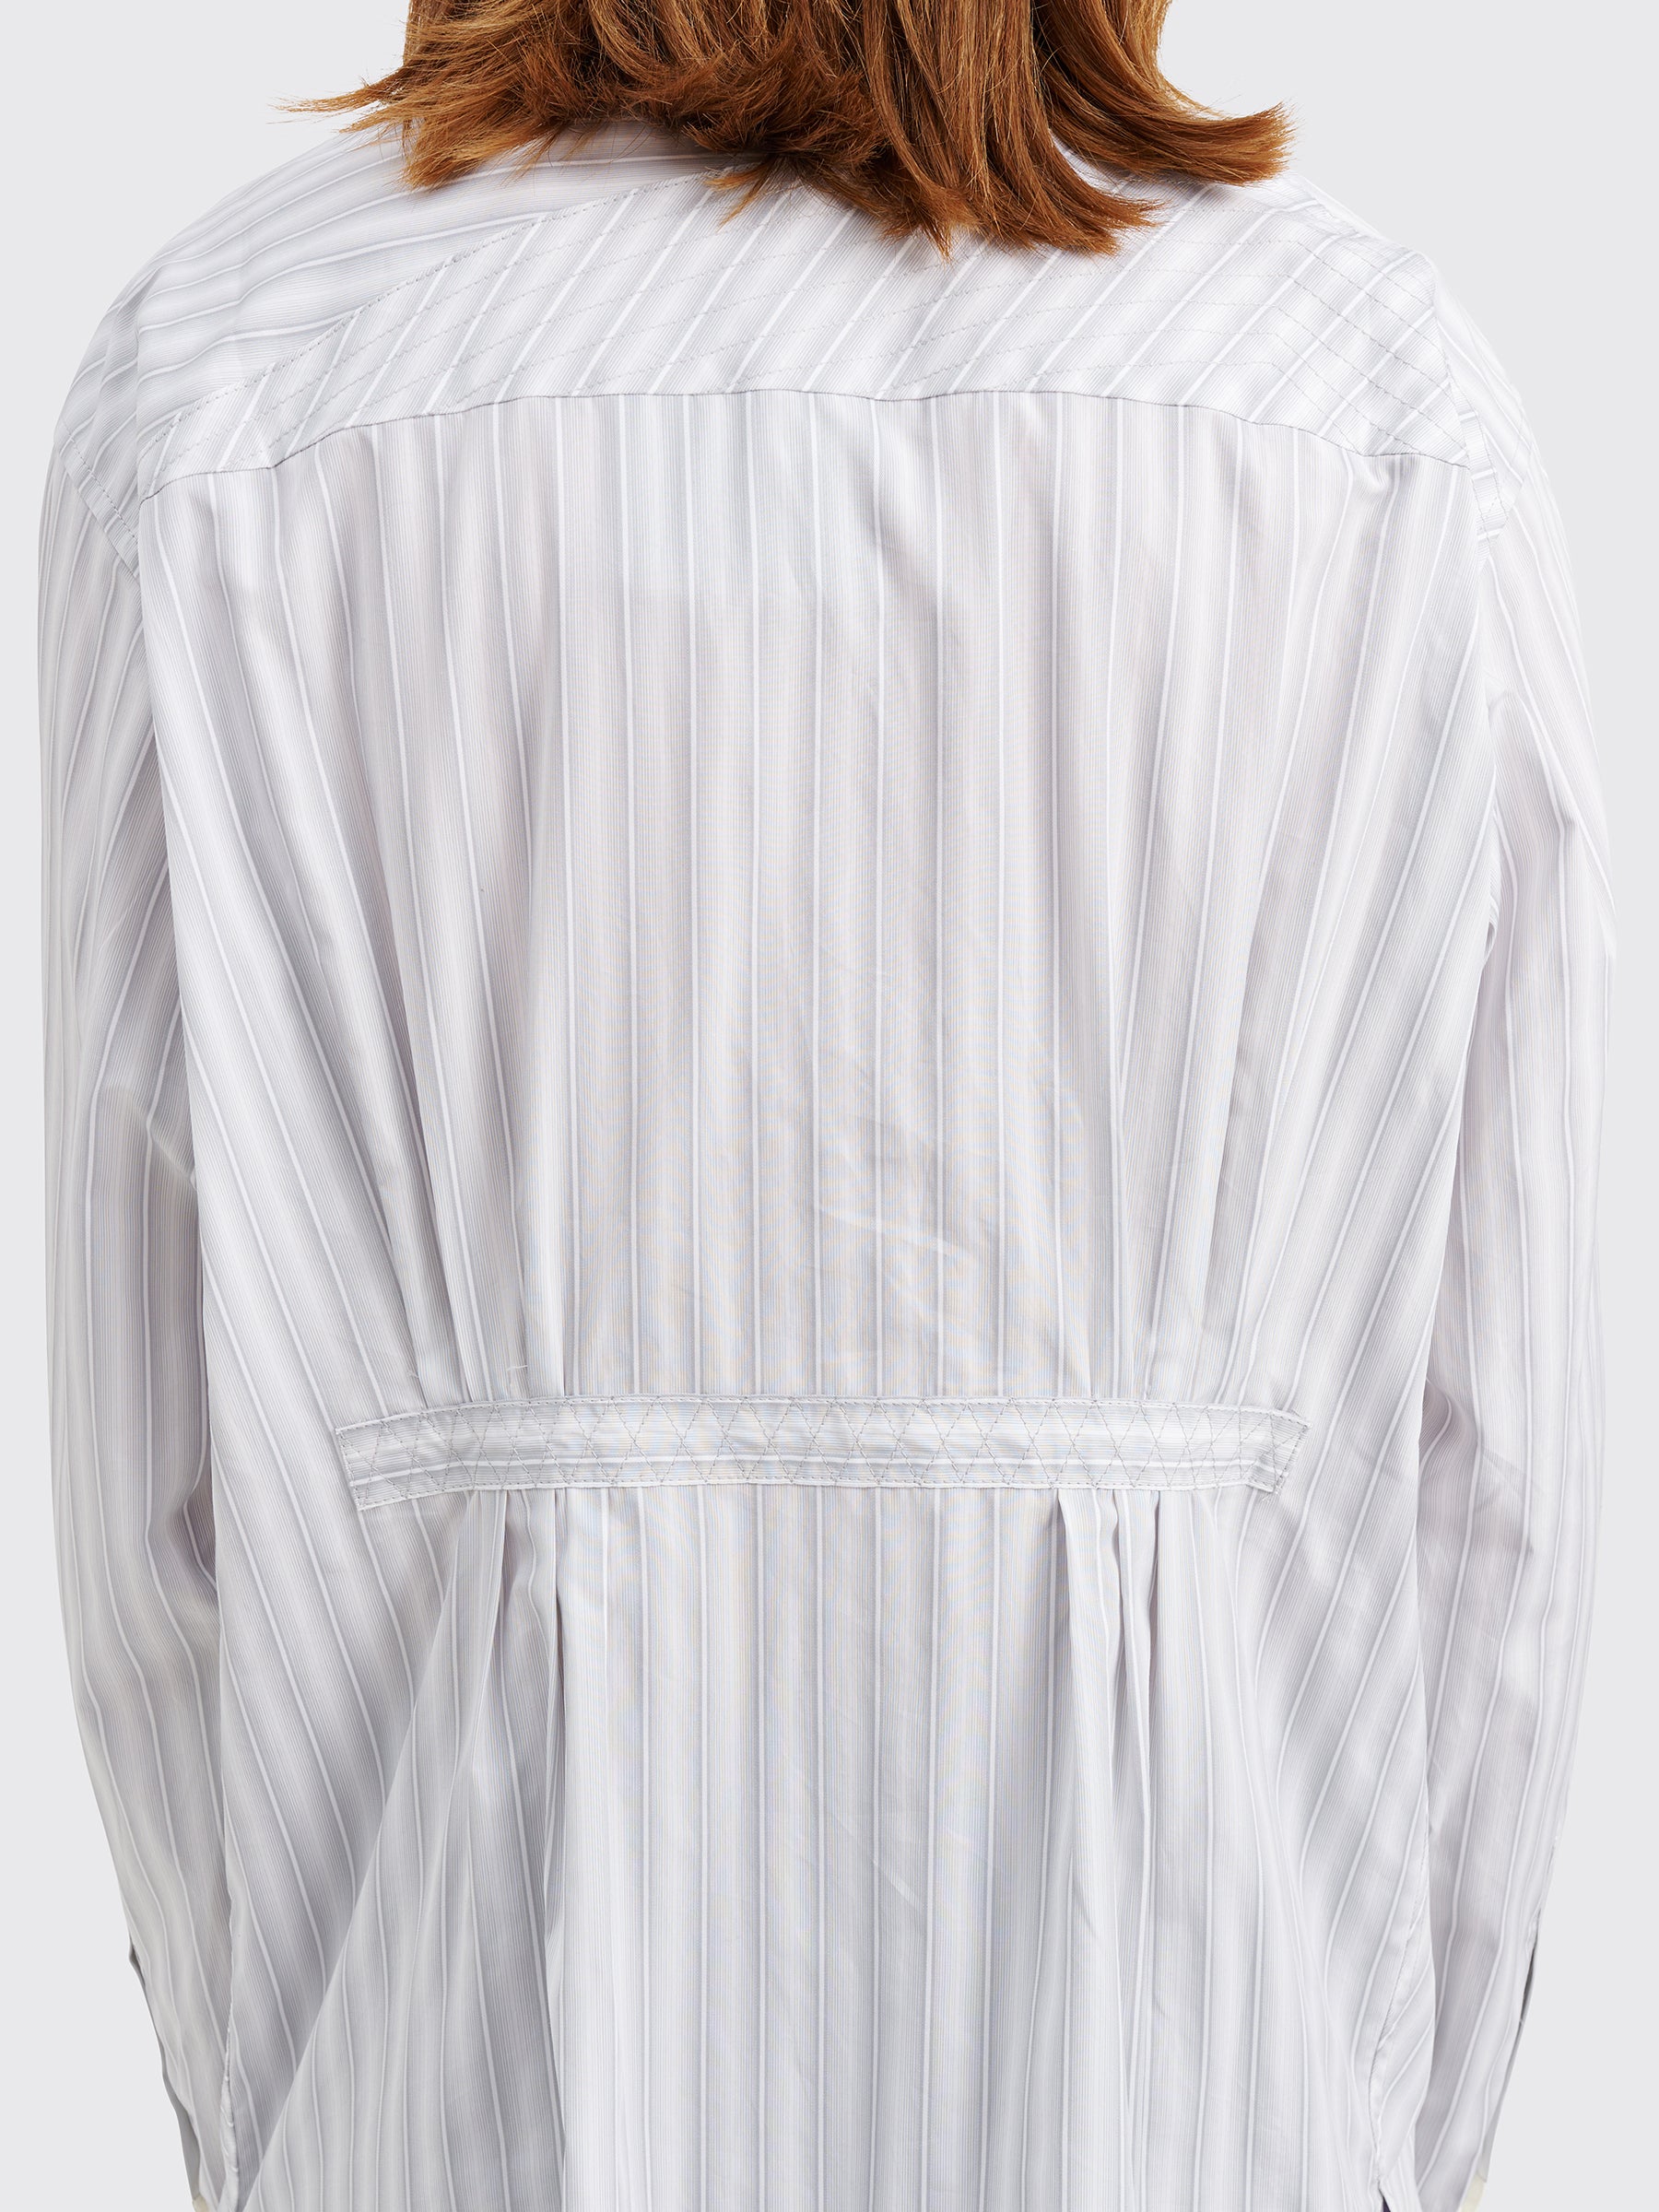 Kiko Kostadinov Aspasia Shirt Twill Light Grey Stripes